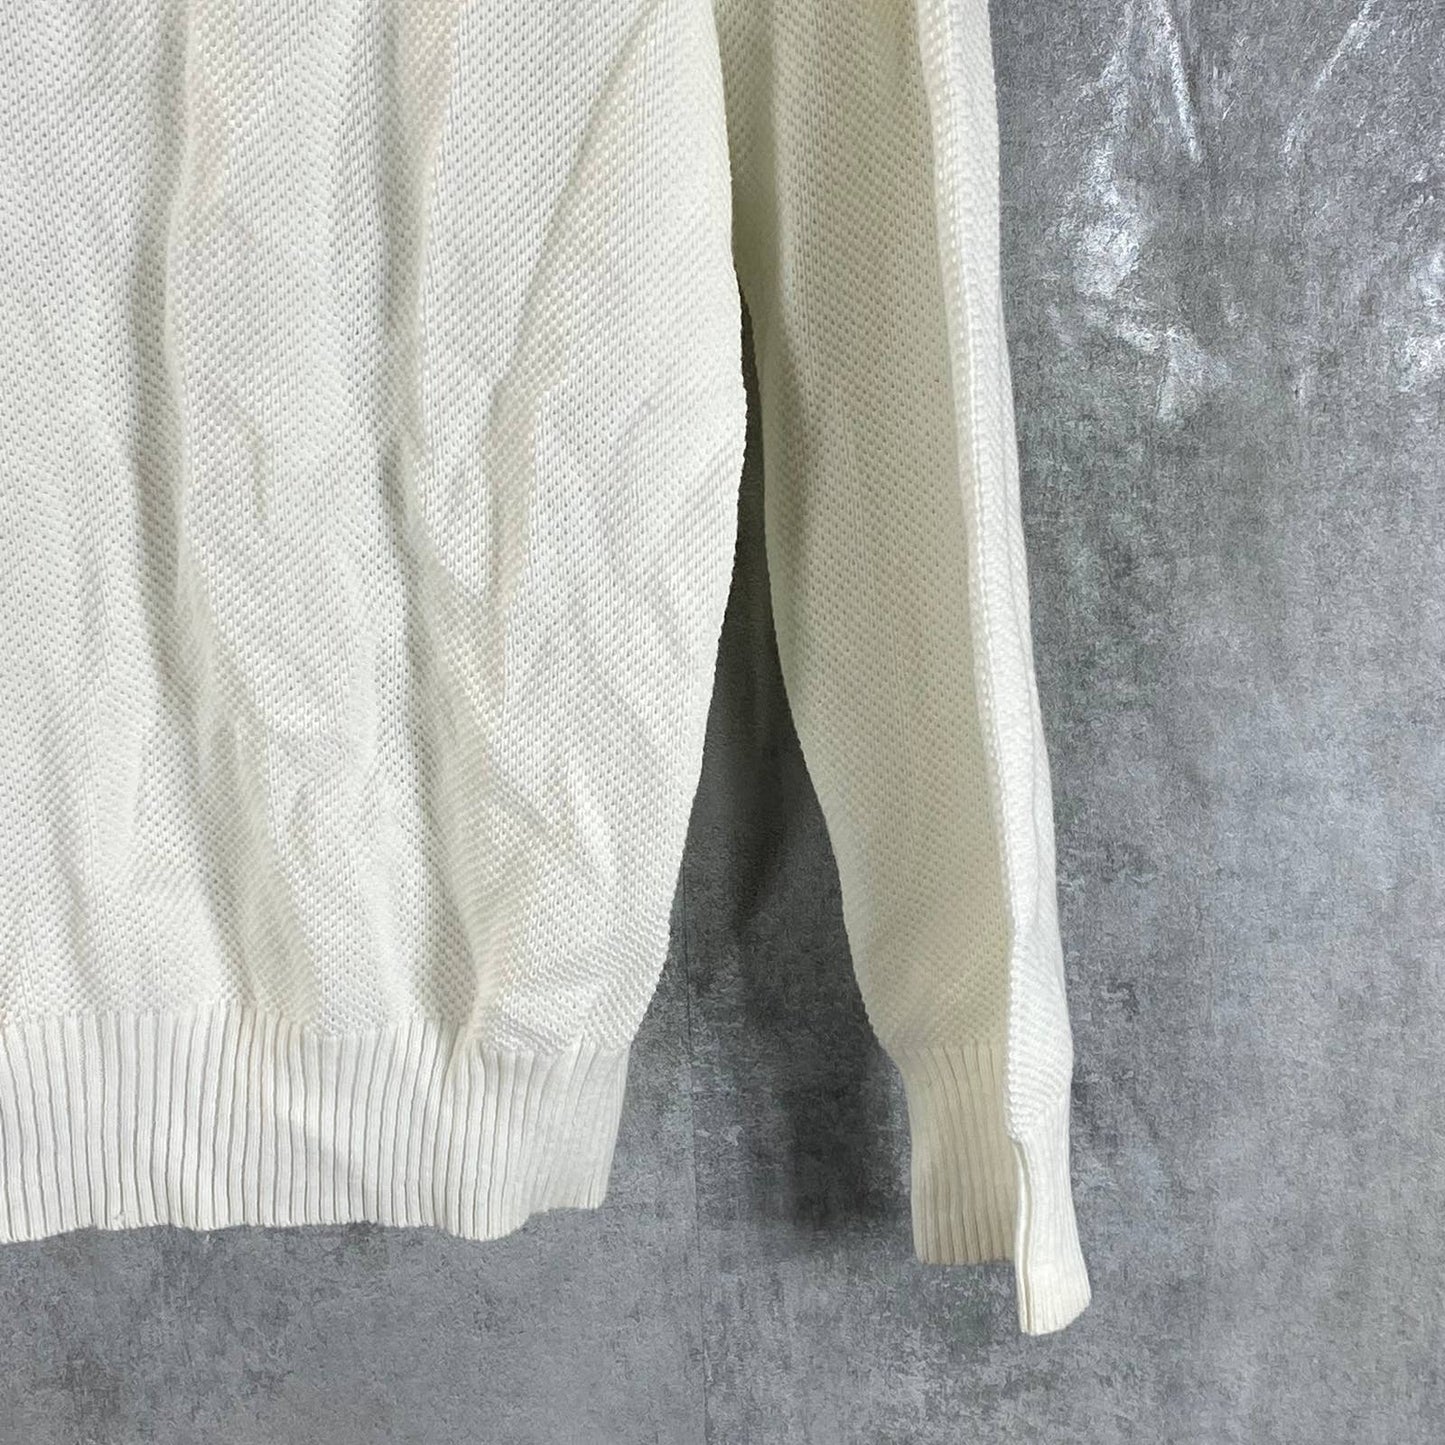 CLUB ROOM Men's Winter Ivory Quarter-Zip Stand-Collar Textured Sweater SZ L